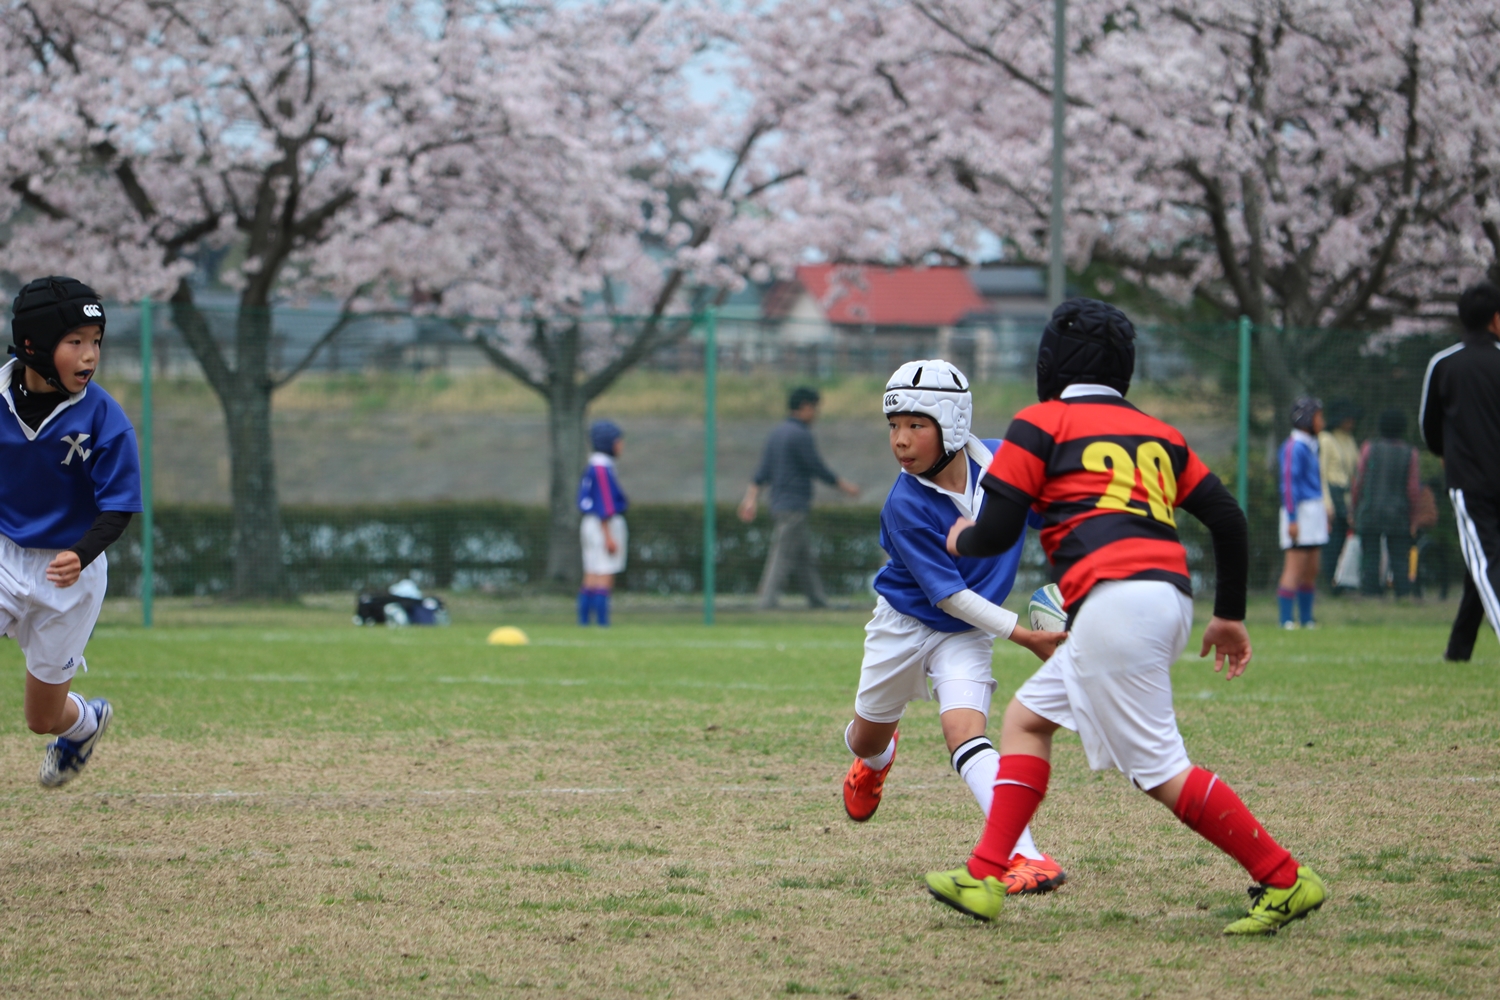 youngwave_kitakyusyu_rugby_school_kasugahai2016043.JPG